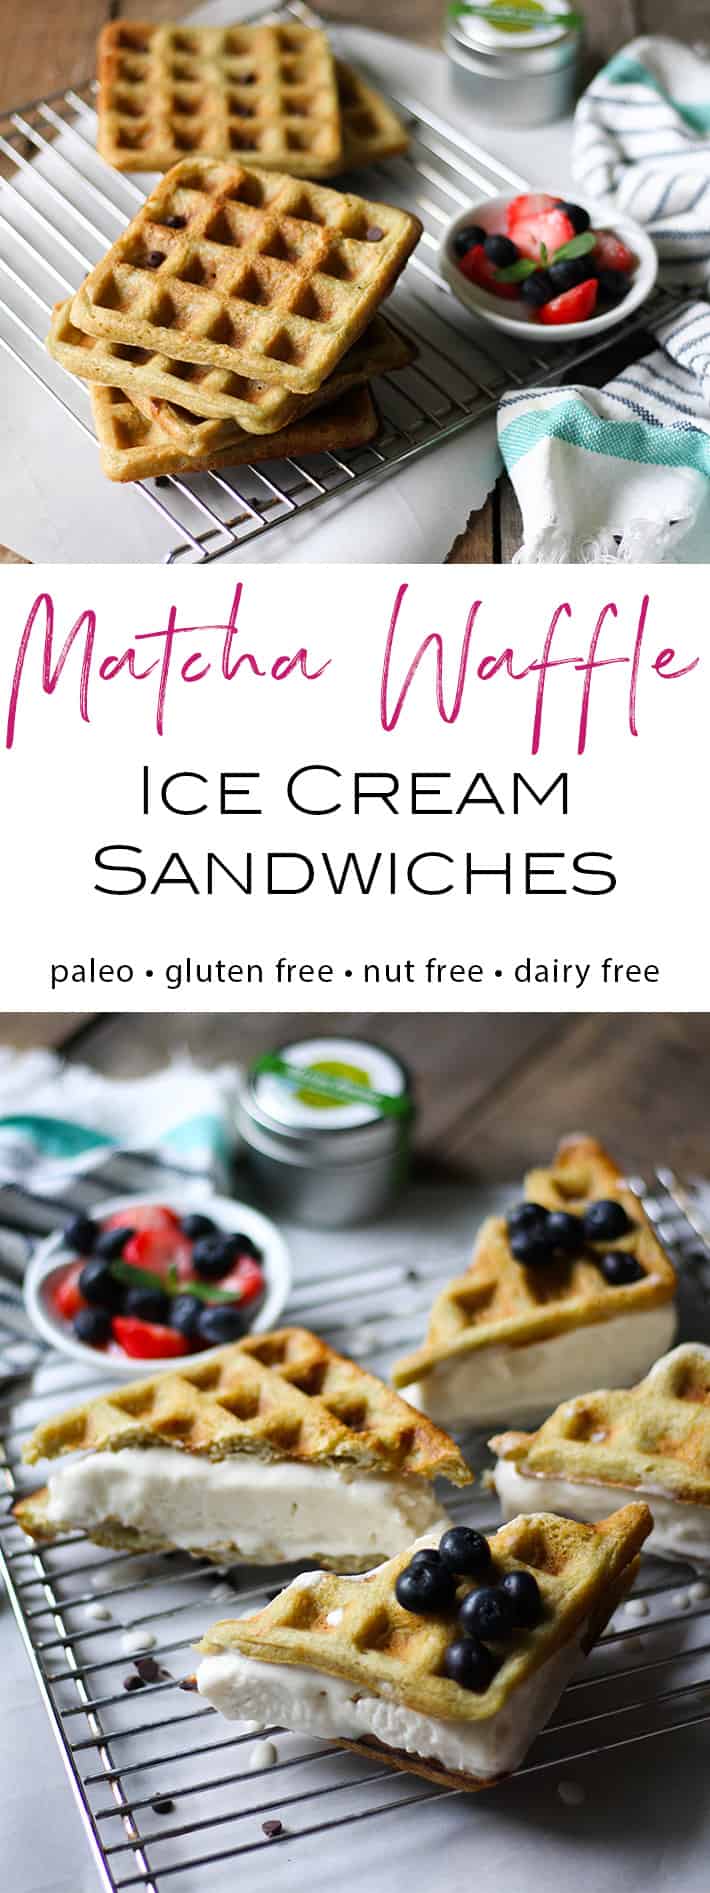 Matcha Waffle Ice Cream Sandwiches - gluten free, grain free, dairy free